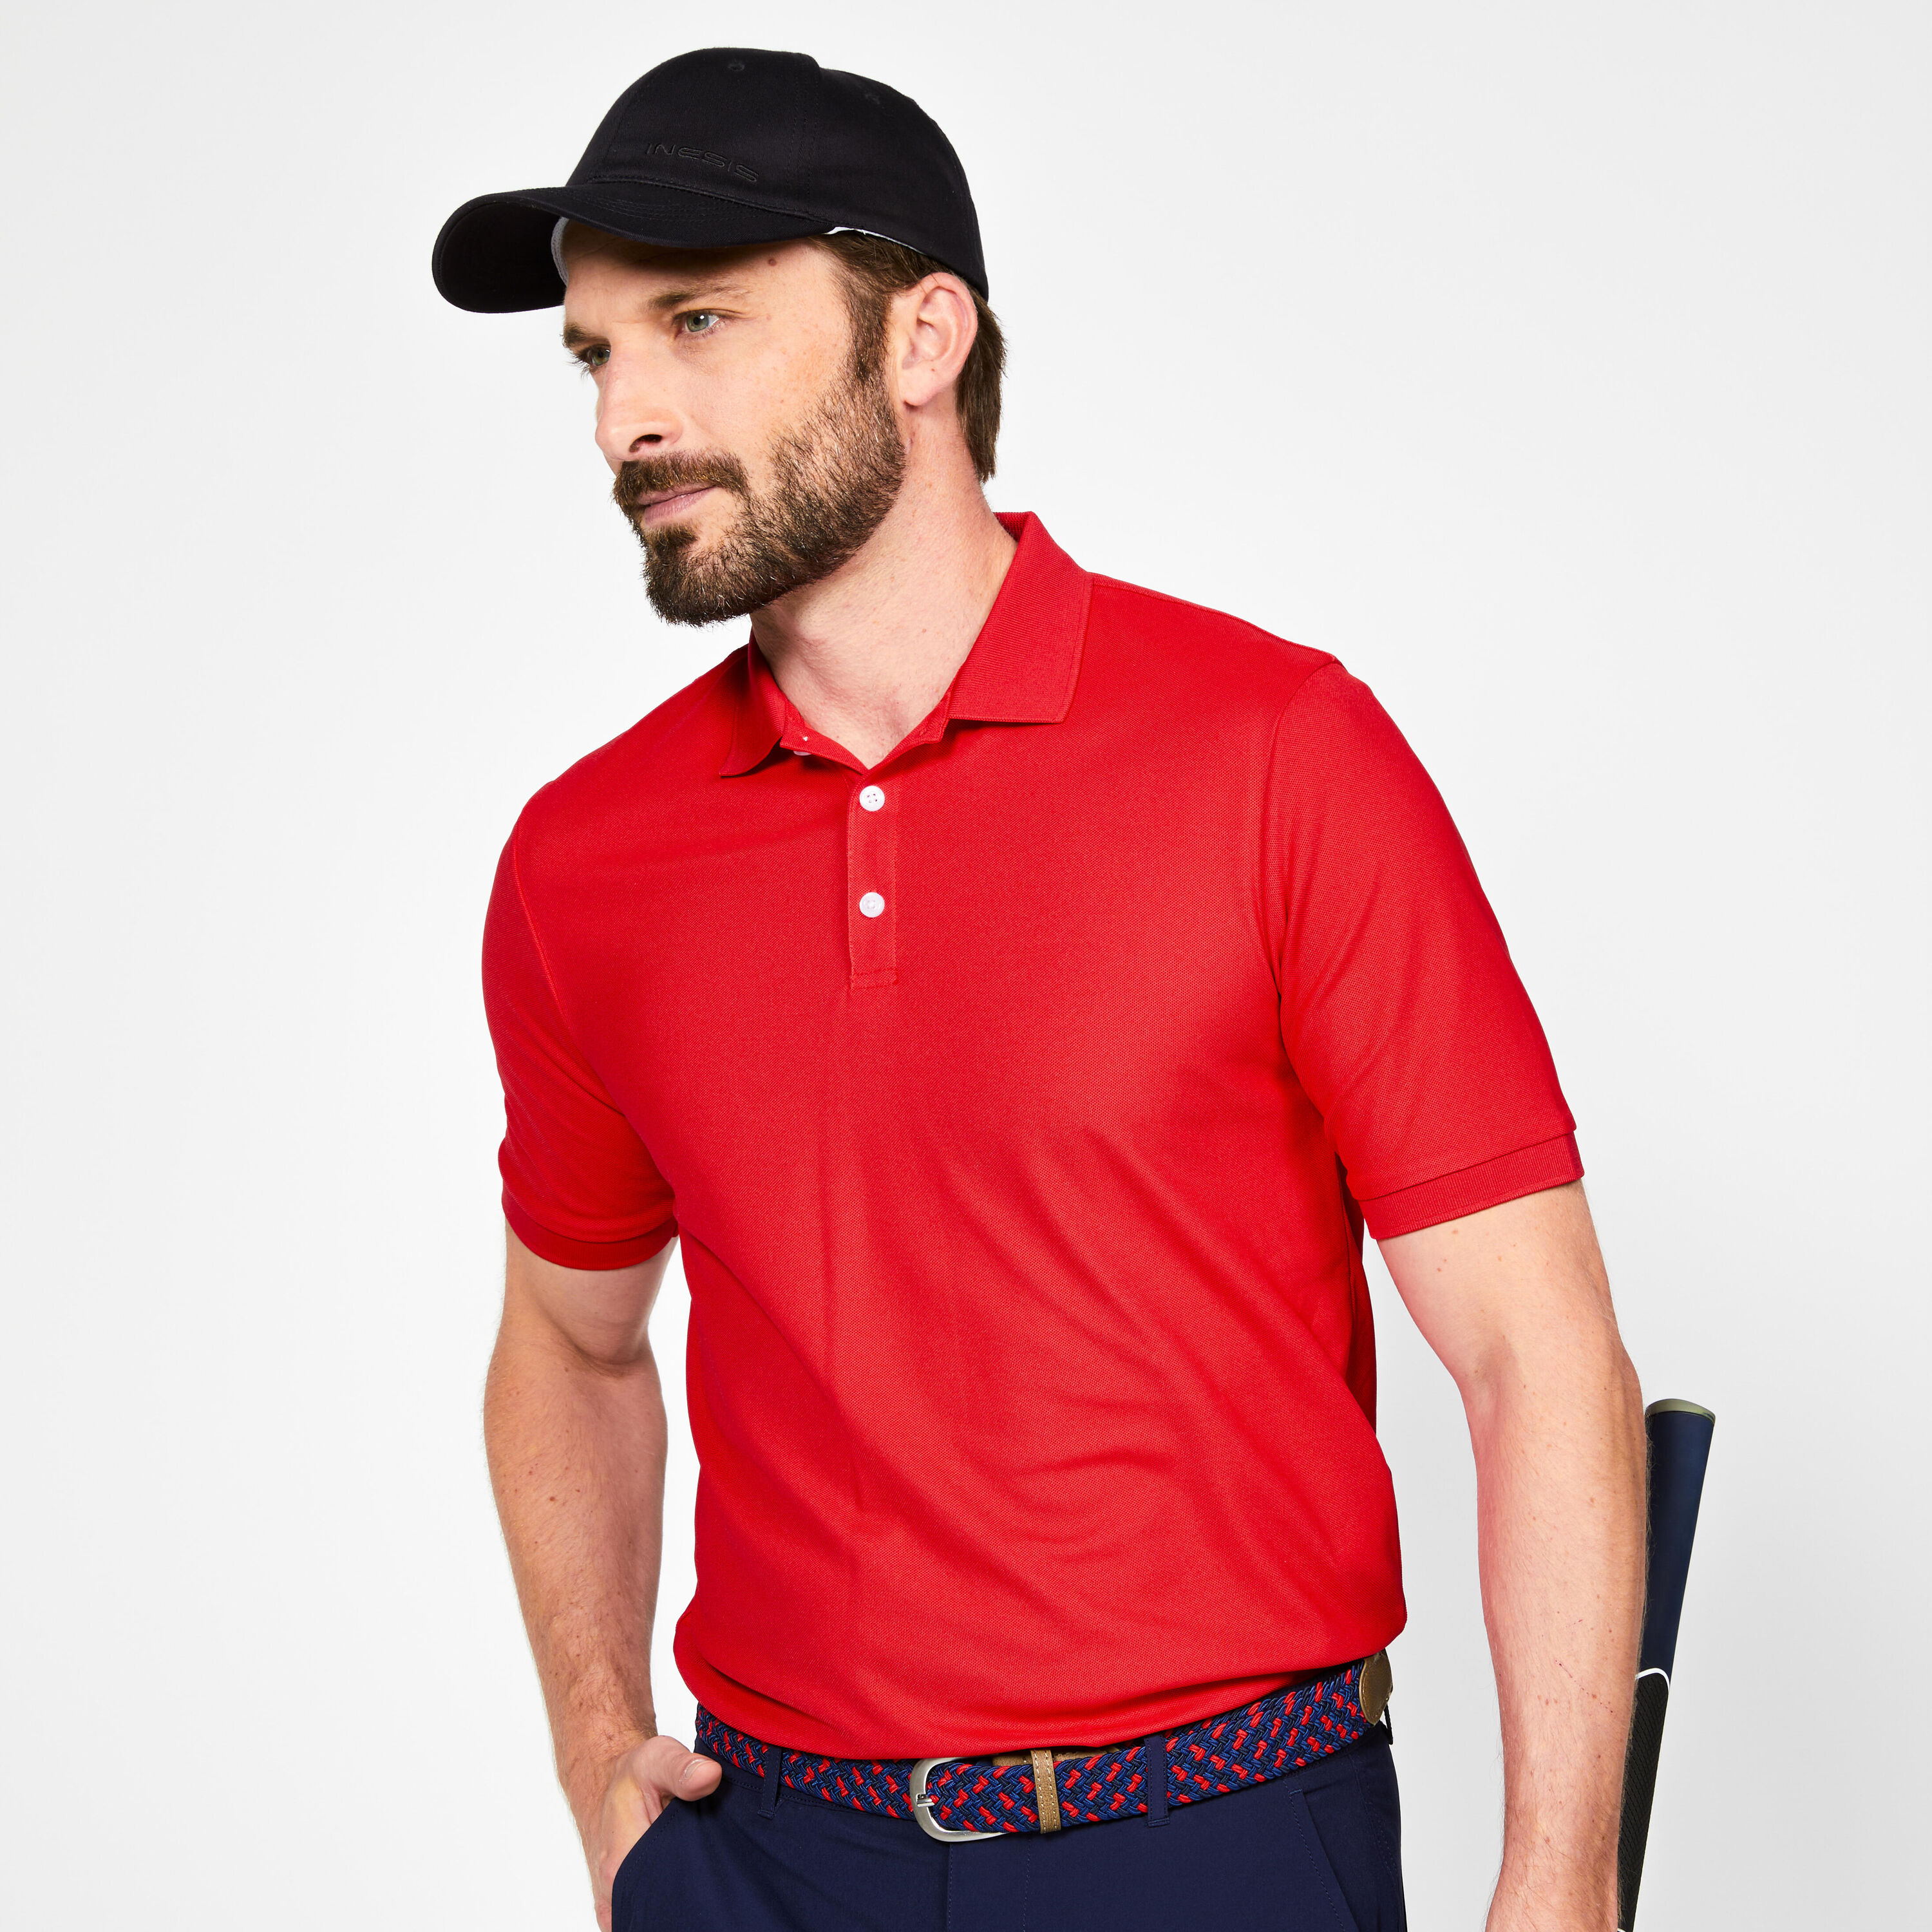 INESIS Men's short-sleeved golf polo shirt - WW500 red